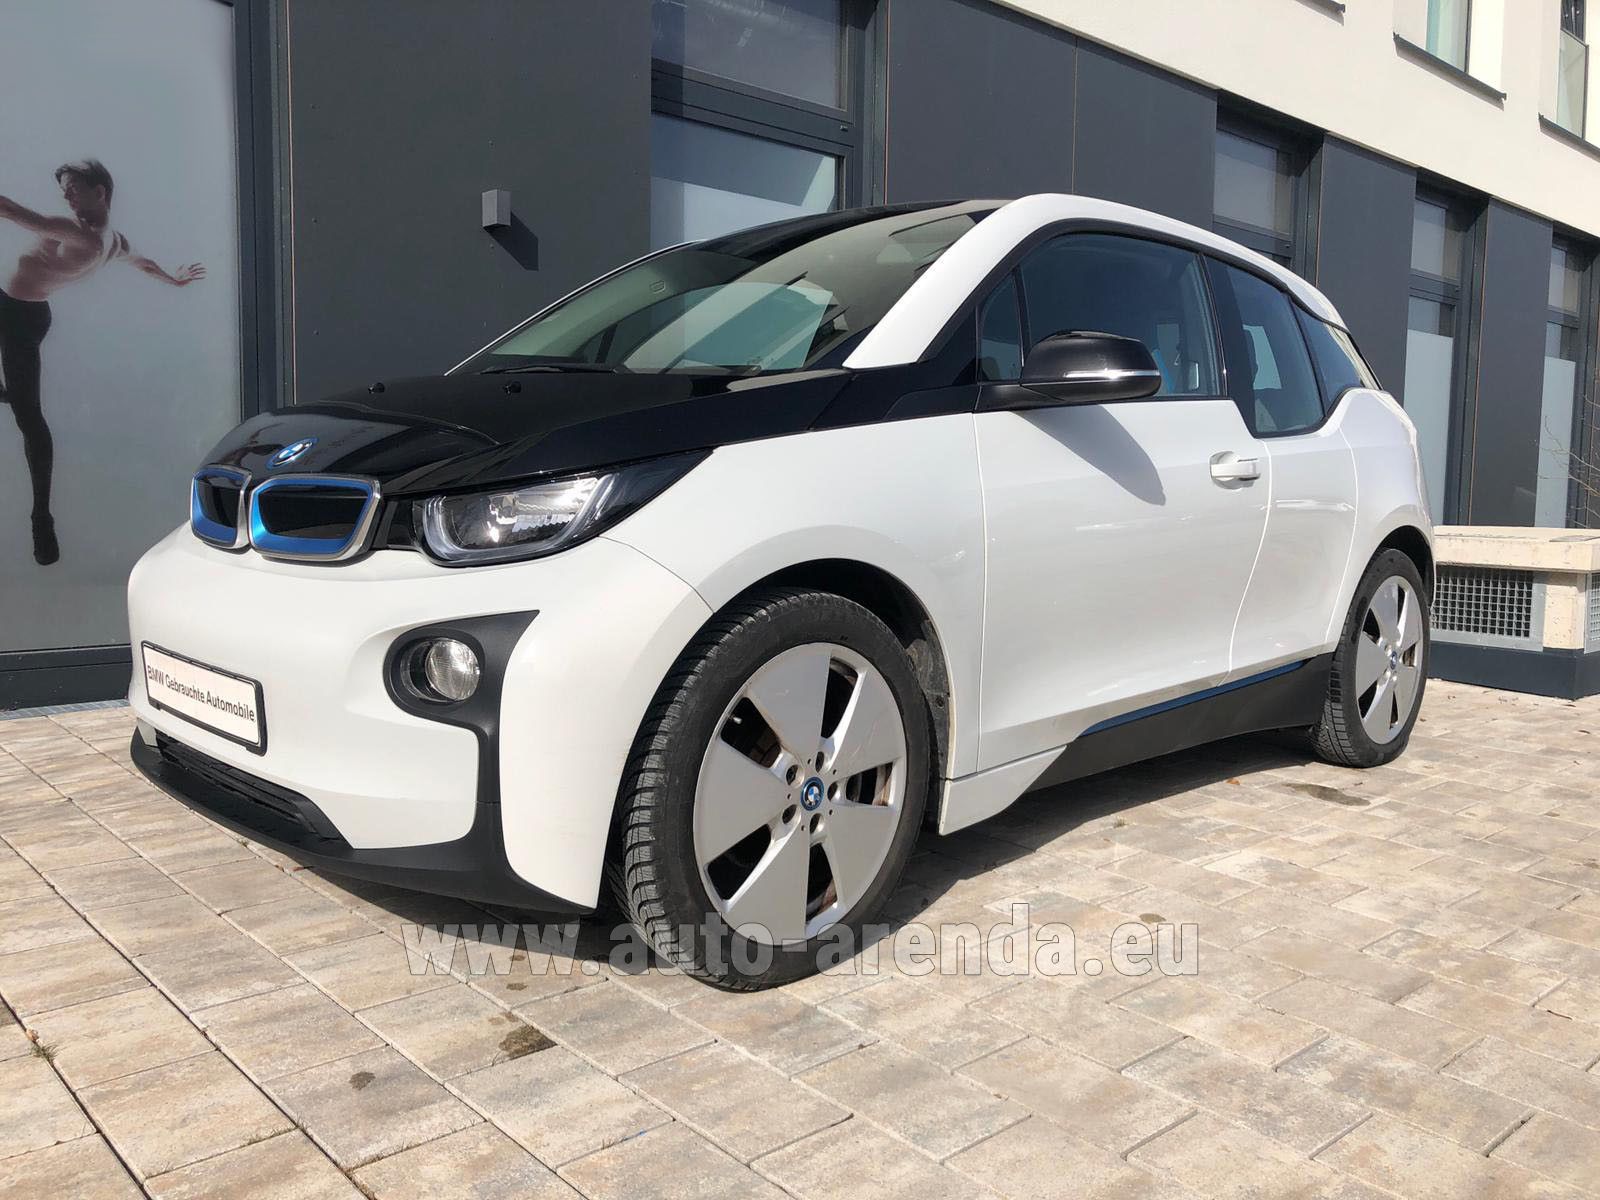 Buy BMW i3 Electric Car 2015 in Spain